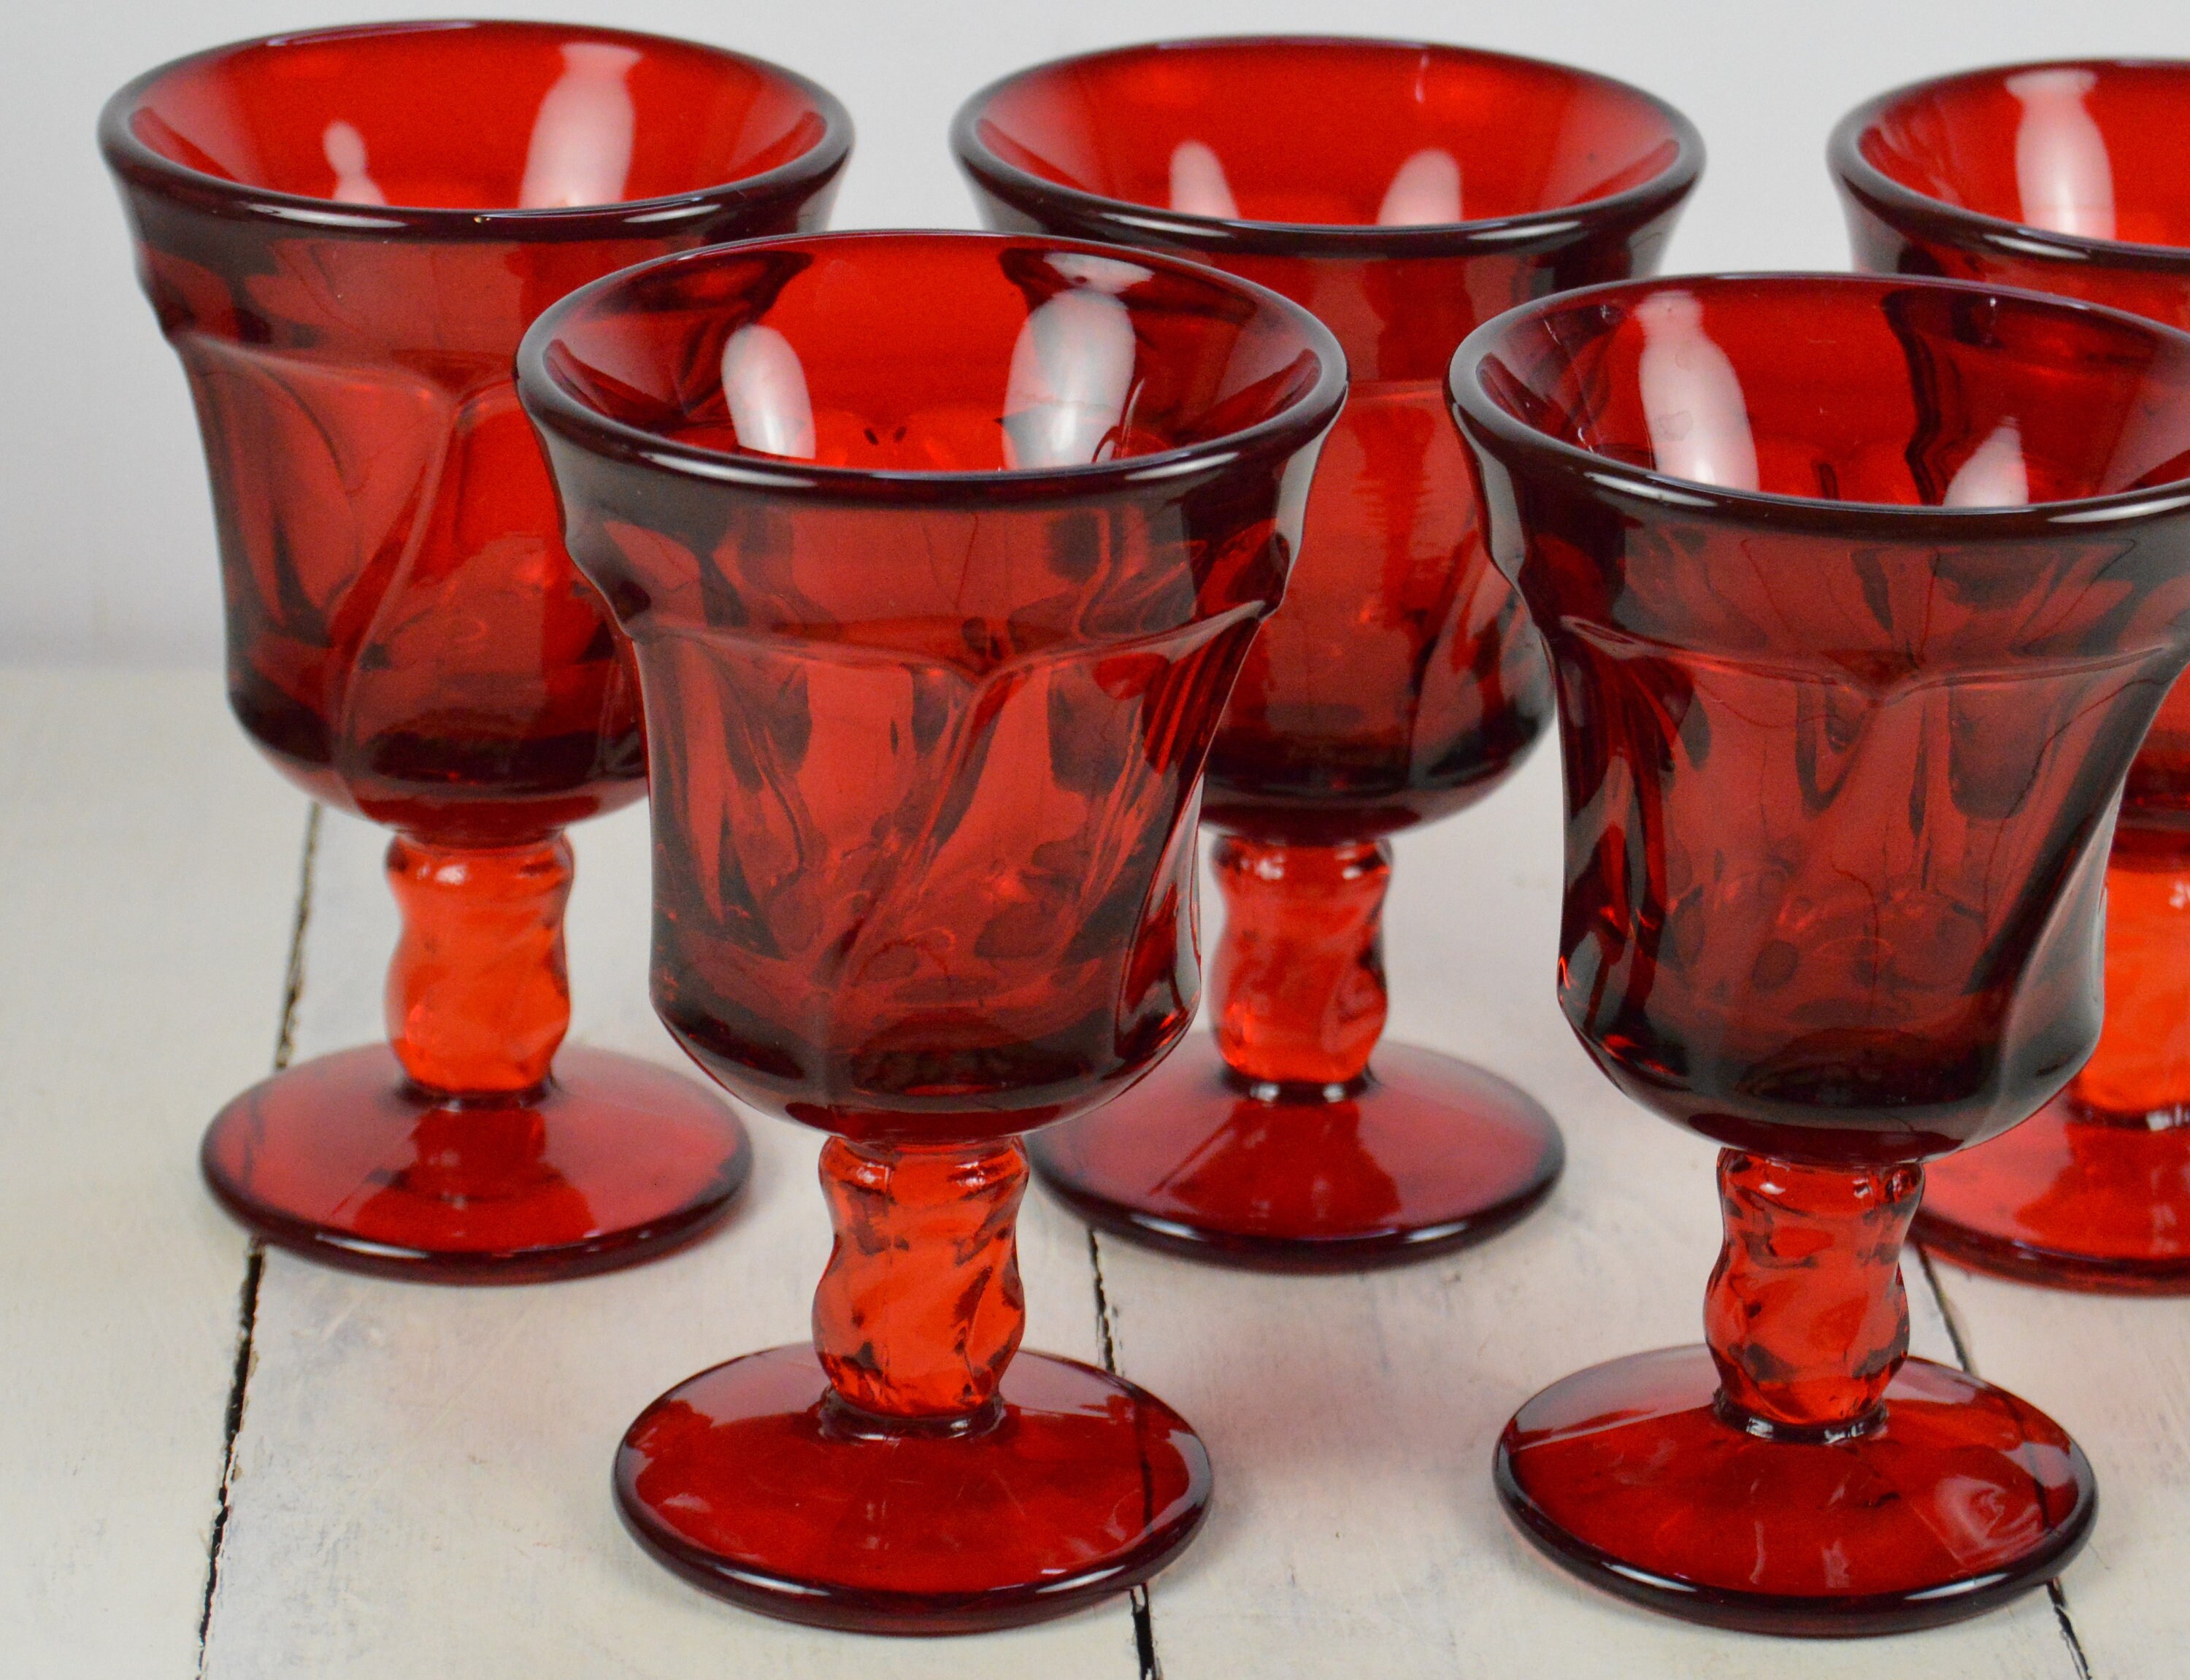 Sachi Red Wine Glasses, Set of 4 - Amber & Pink